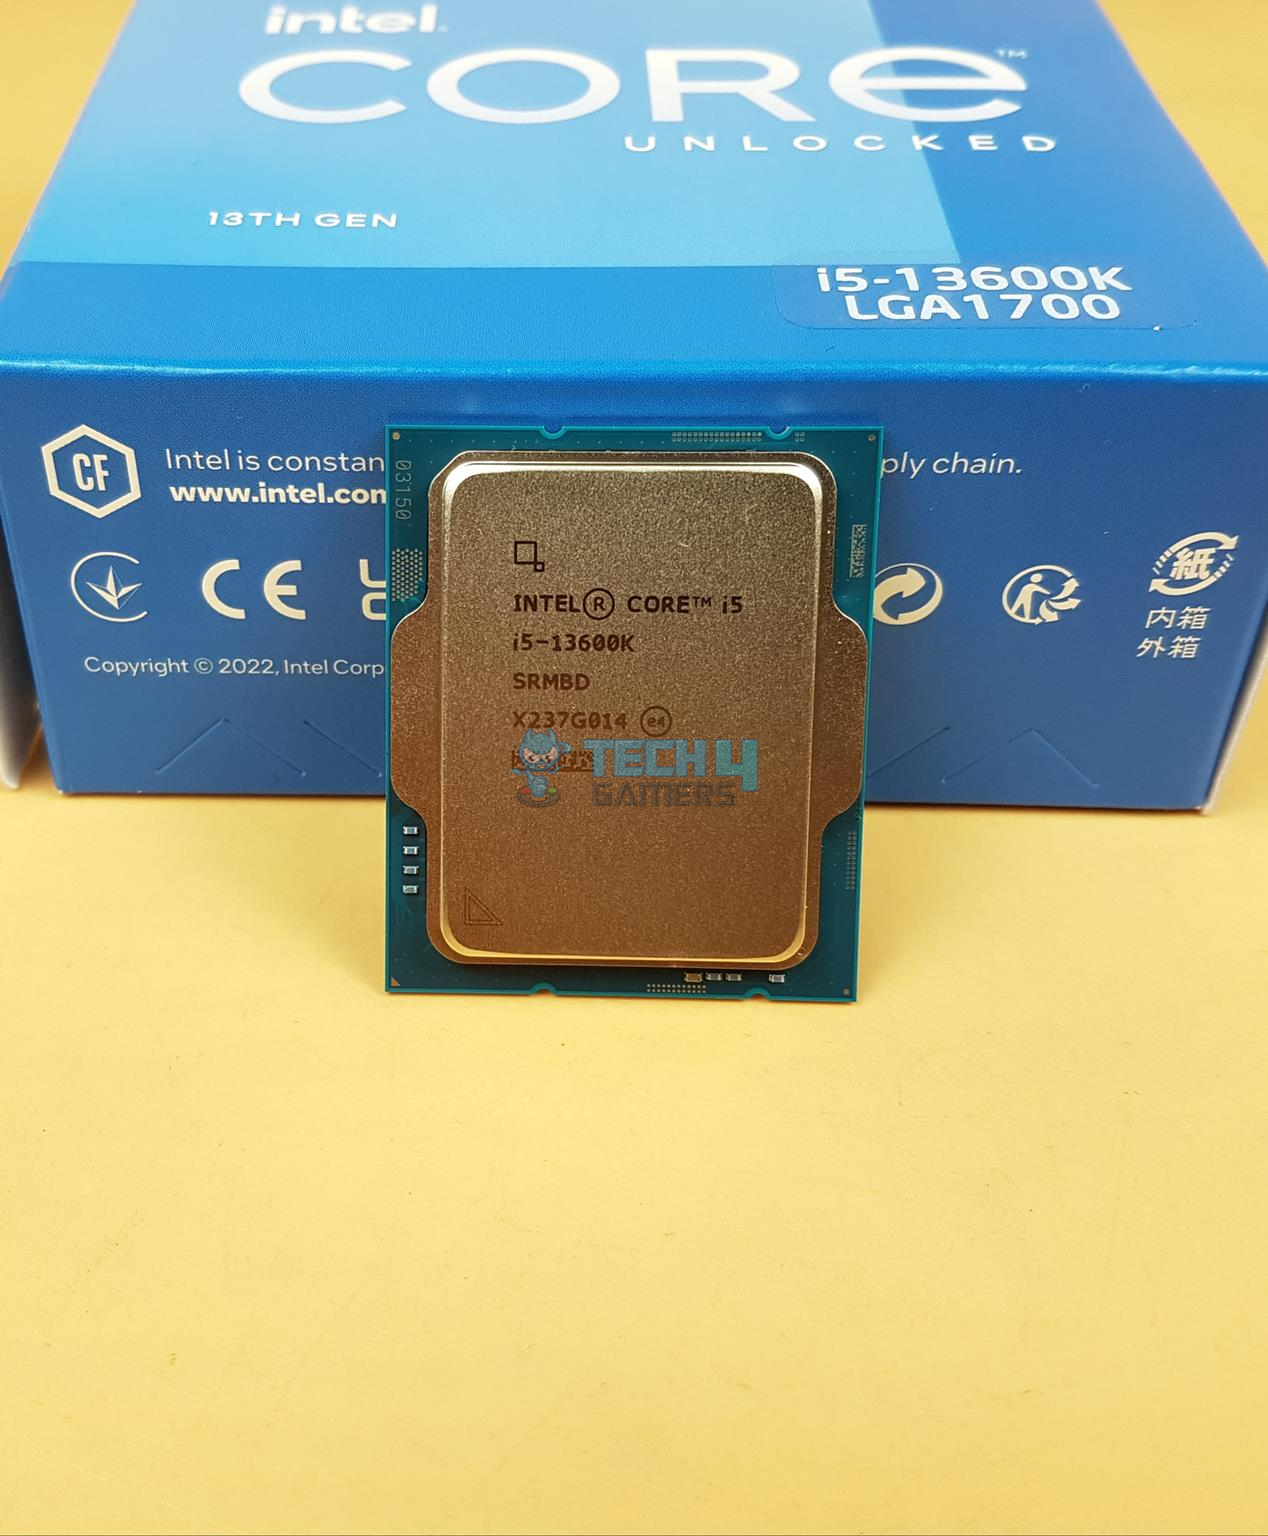 The Core i5-13600K CPU next to its box